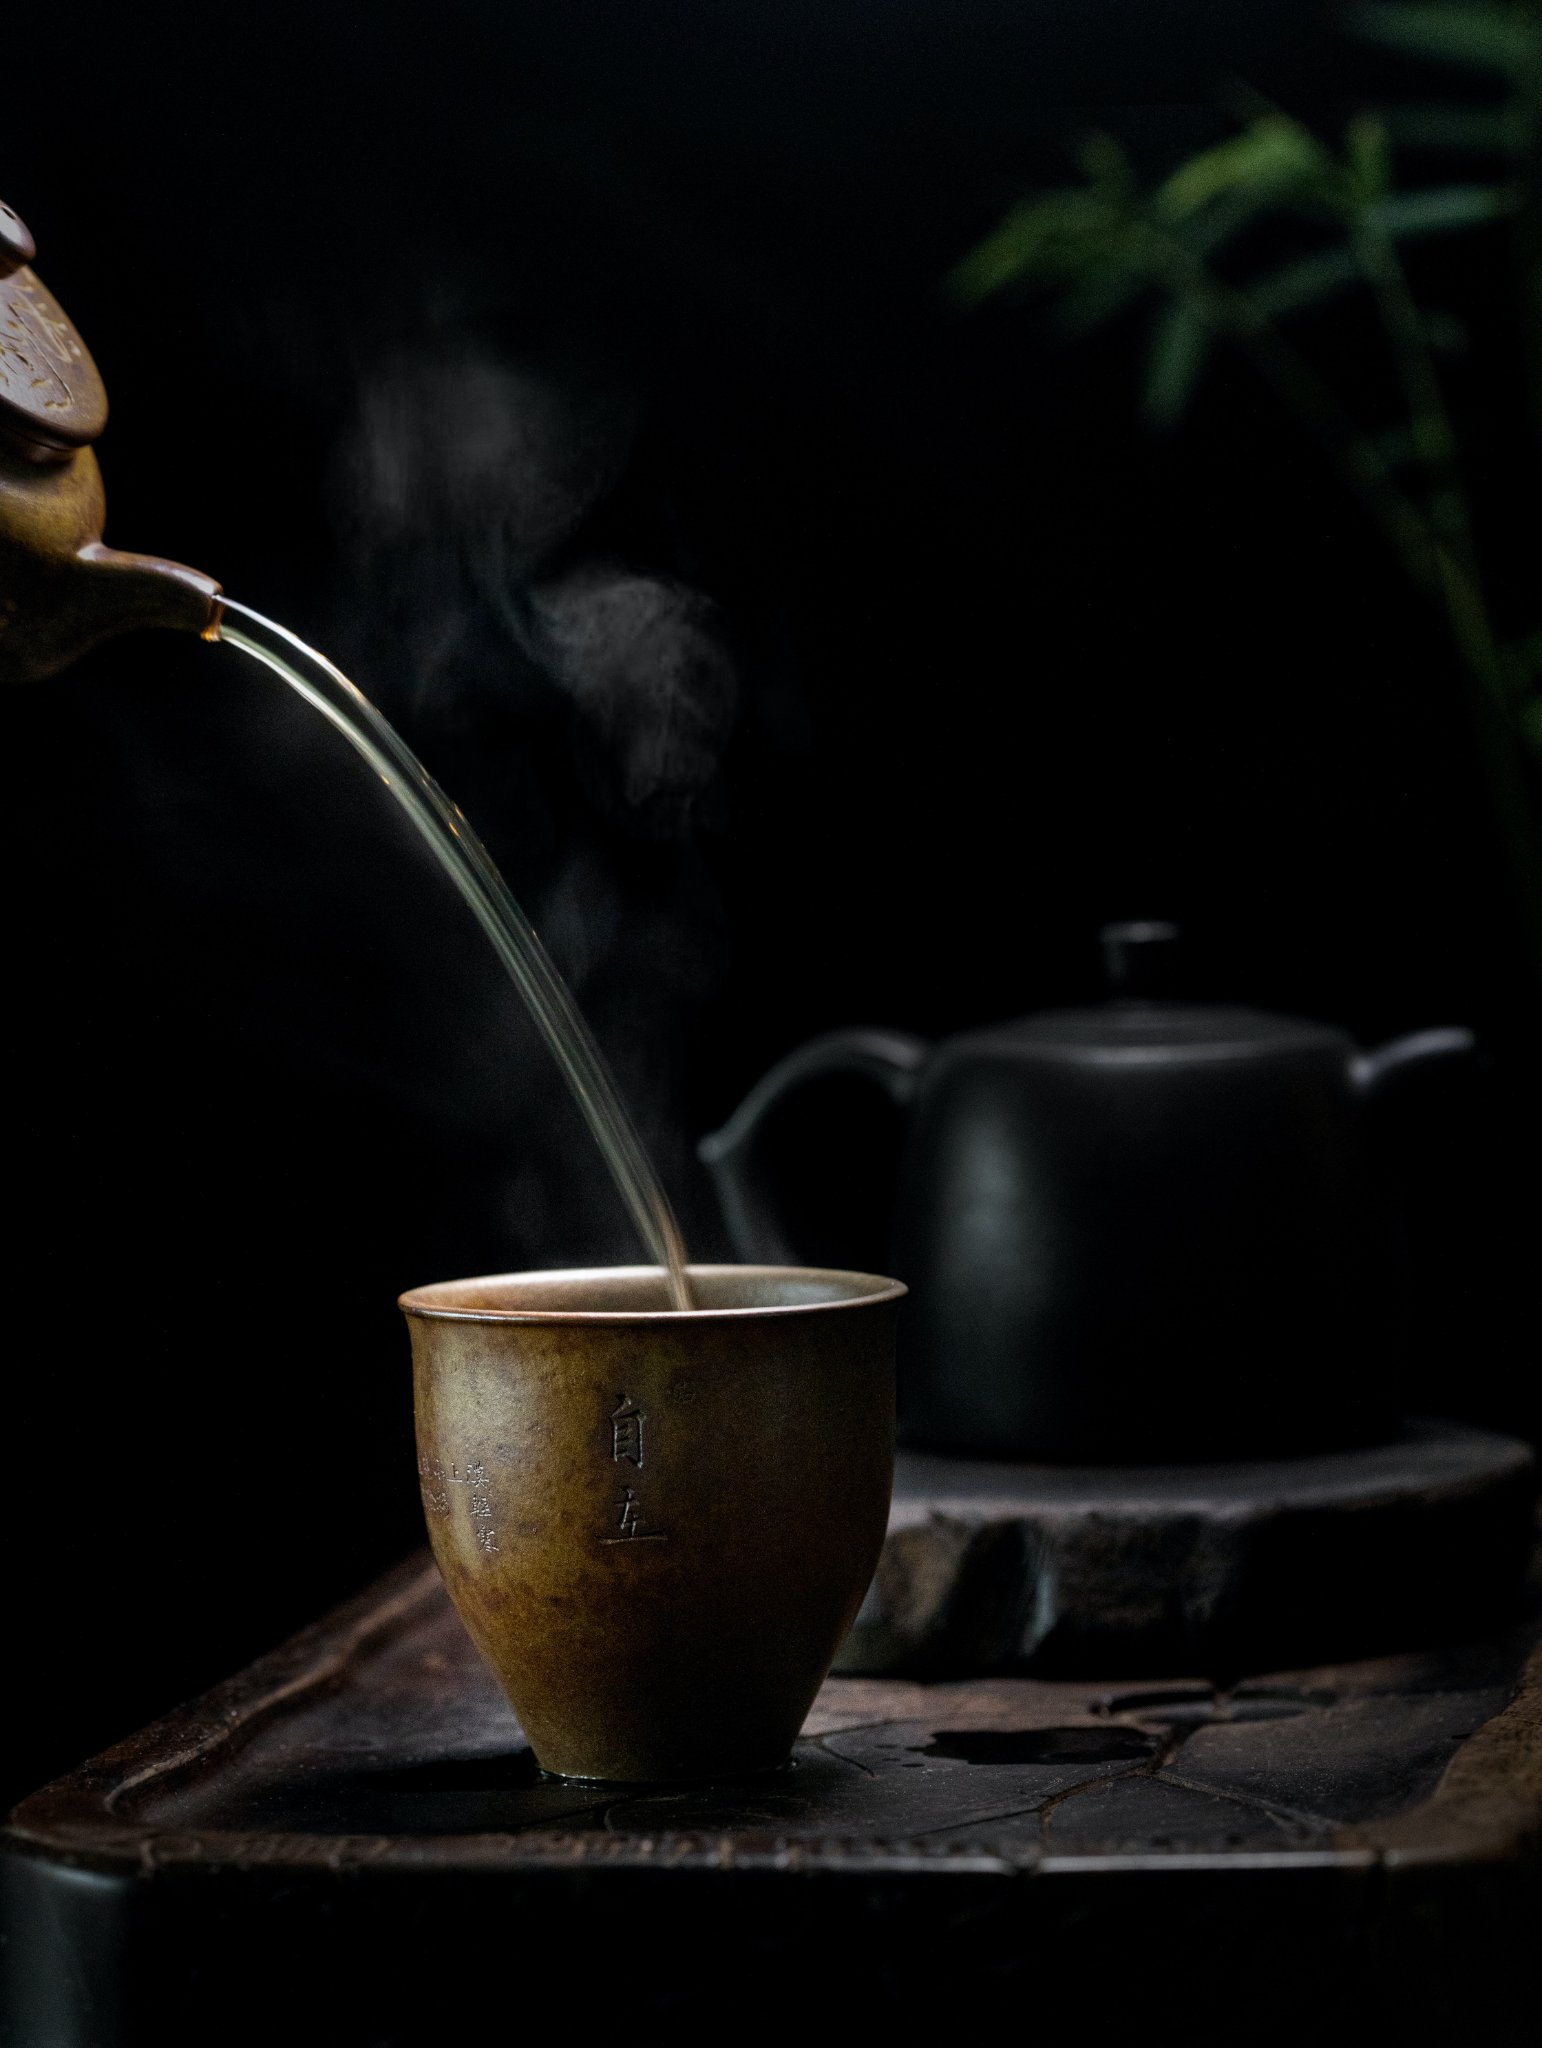 kyobashi - วิธีชงชา - ชาดำ